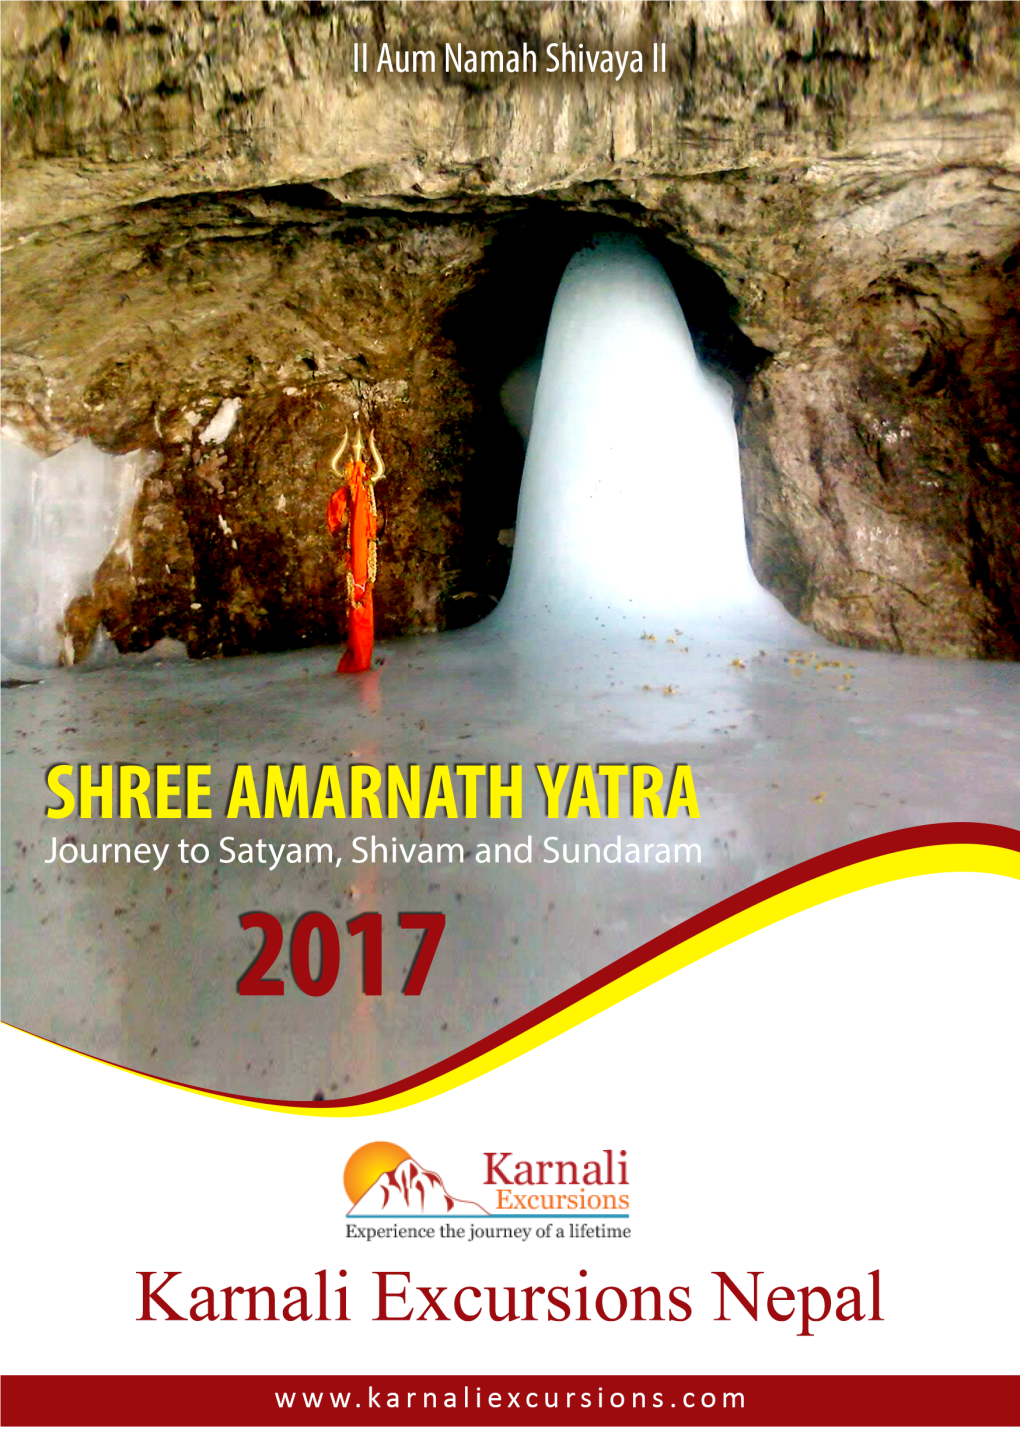 SHREE AMARNATH YATRA 2017 Shree Amarnath Yatra Journey to Satyam, Shivam and Sundaram